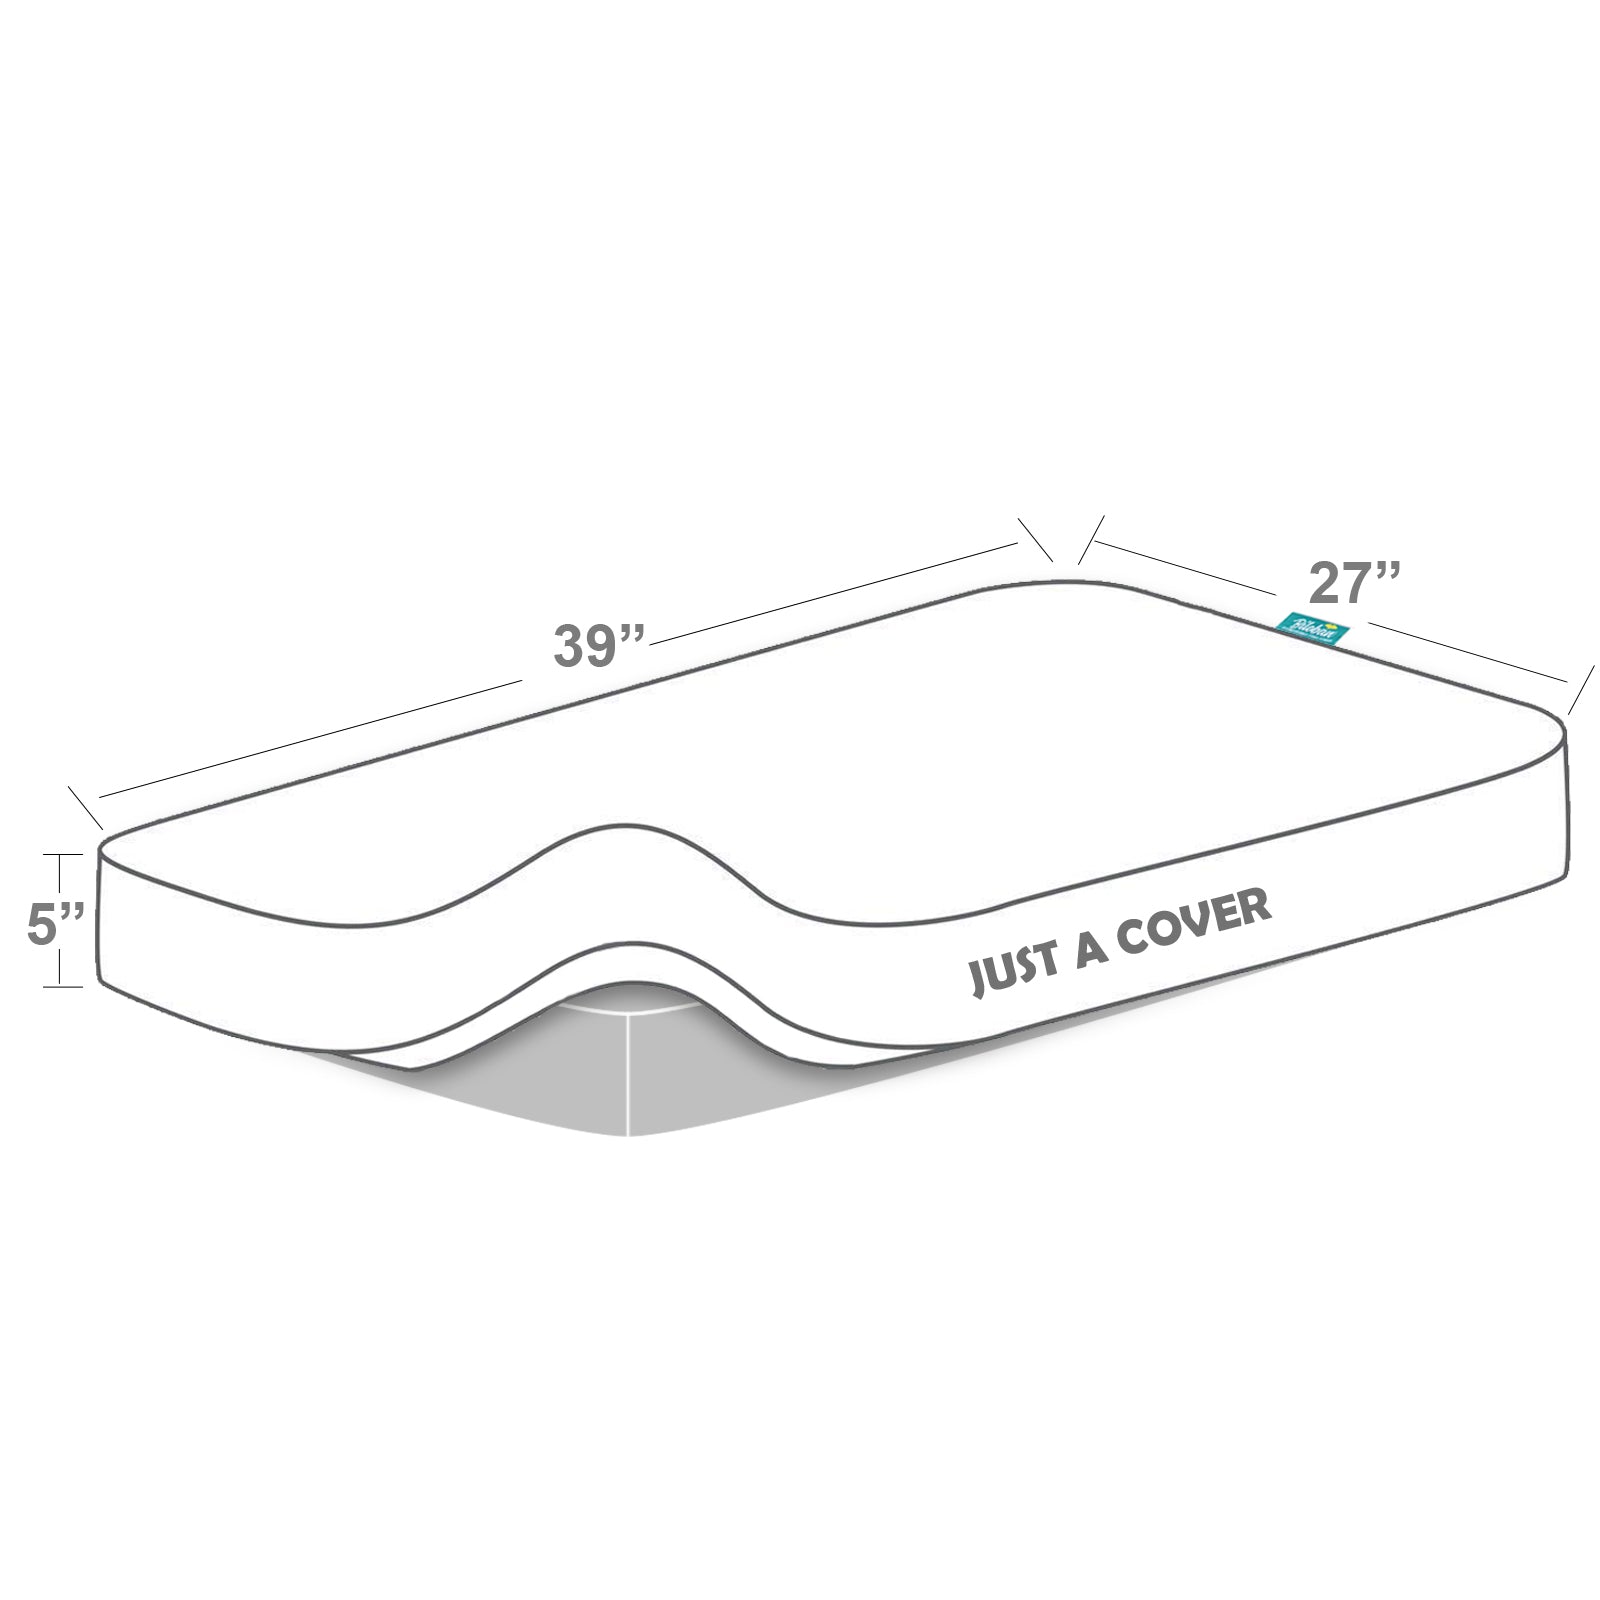 Pack N Play Mattress Pad Cover - Microfiber ( for Mini Crib 39" x 27” ), Cloud print, Navy blue - Biloban Online Store